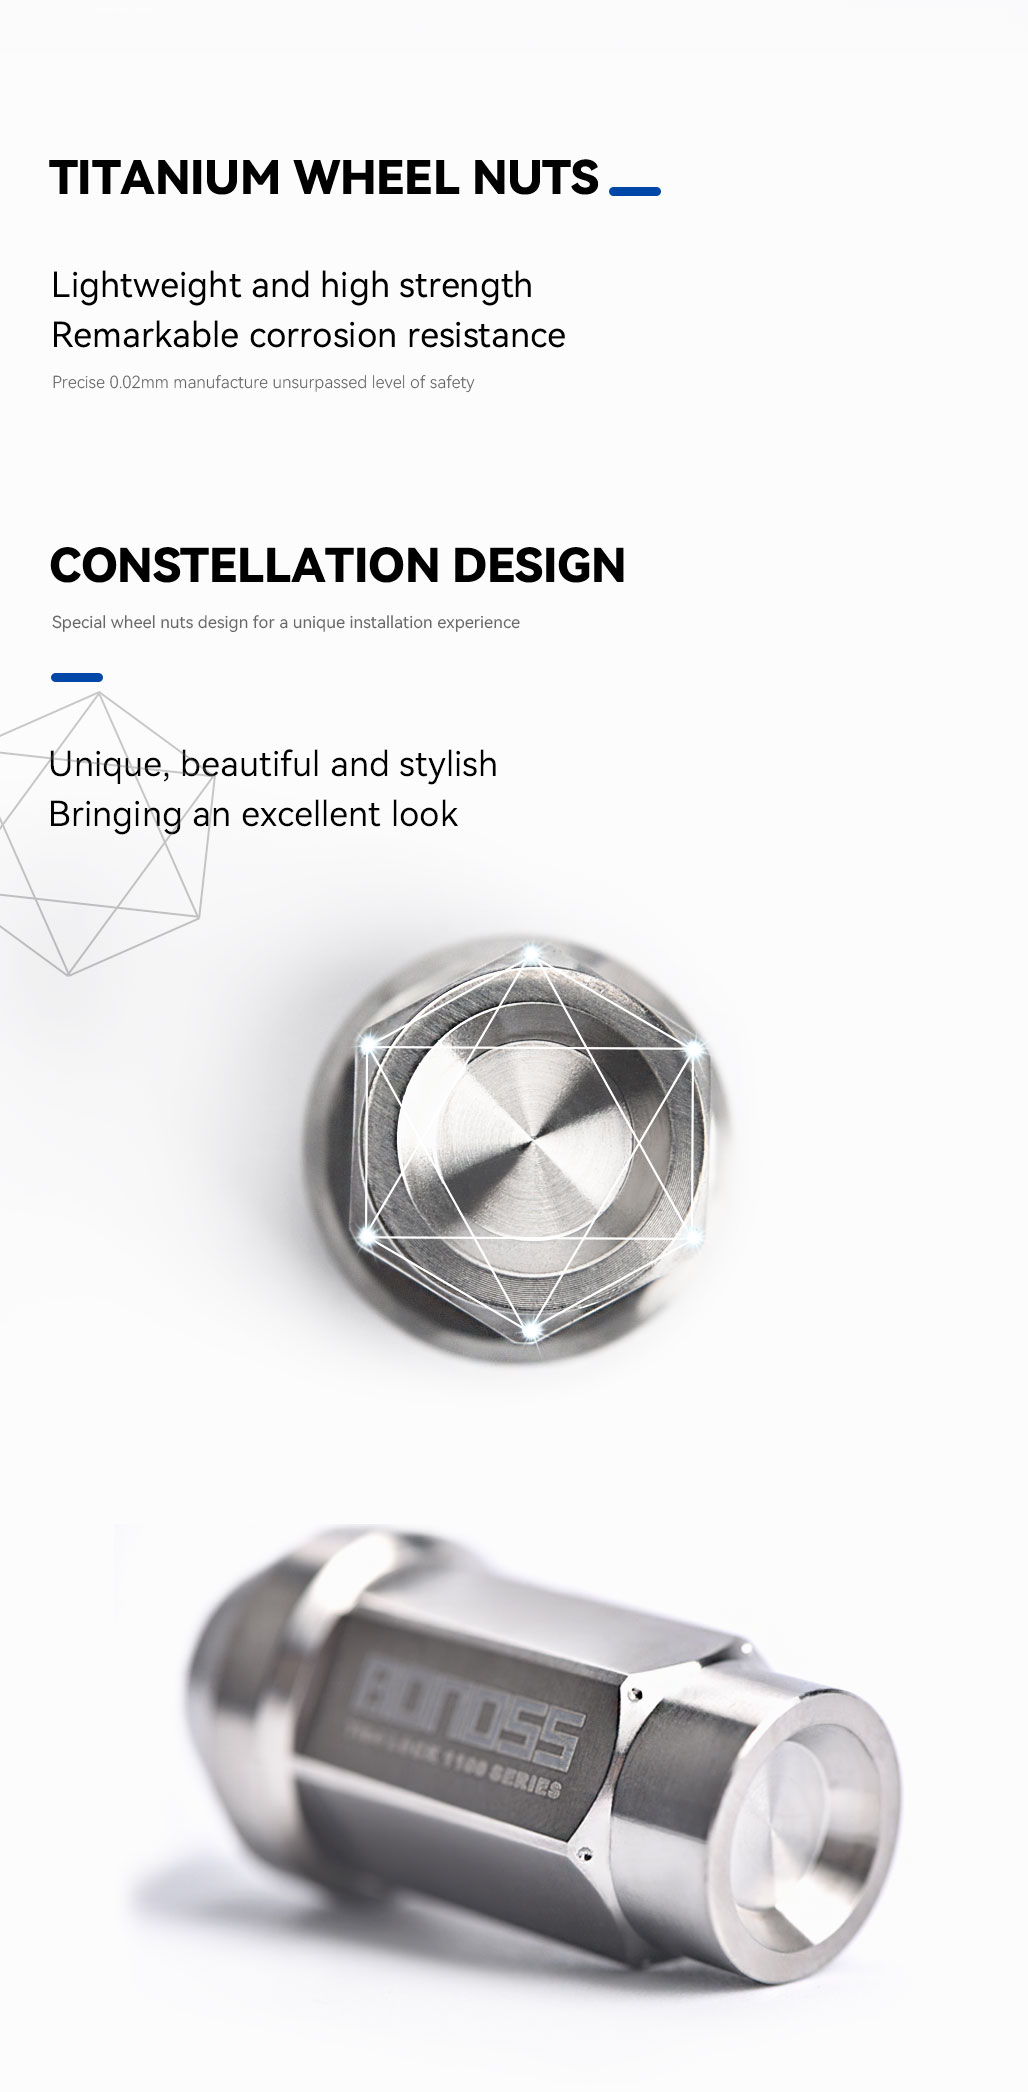 BONOSS-forged-titanium-wheel-nuts-constellation-design-by-lulu-2